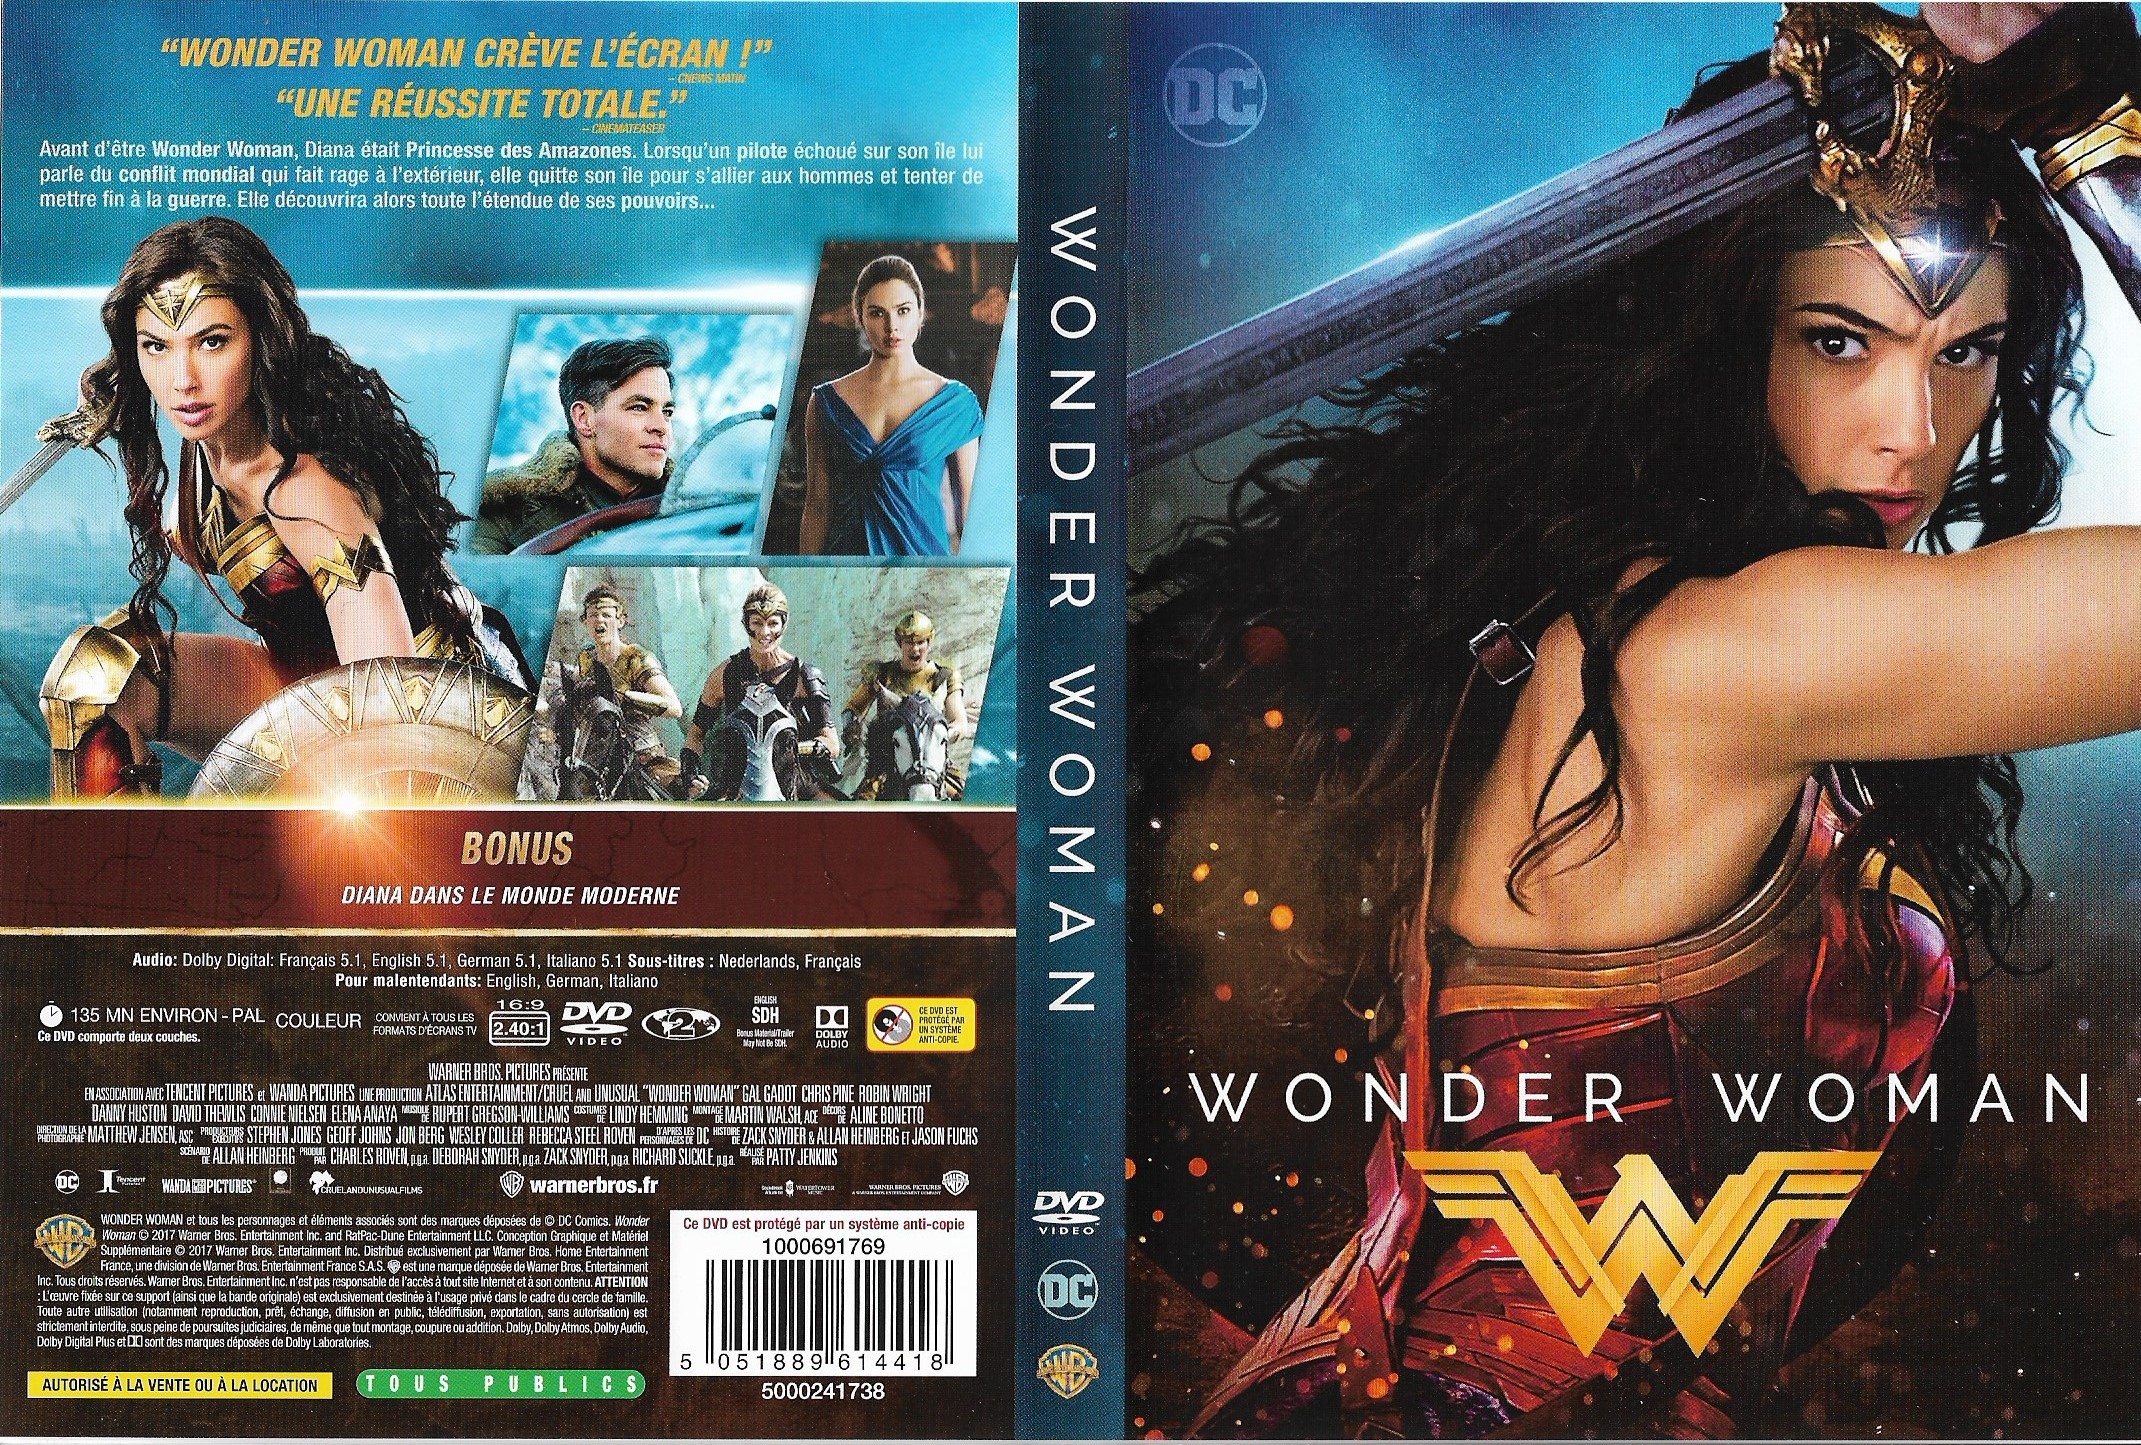 Jaquette DVD Wonder Woman v2